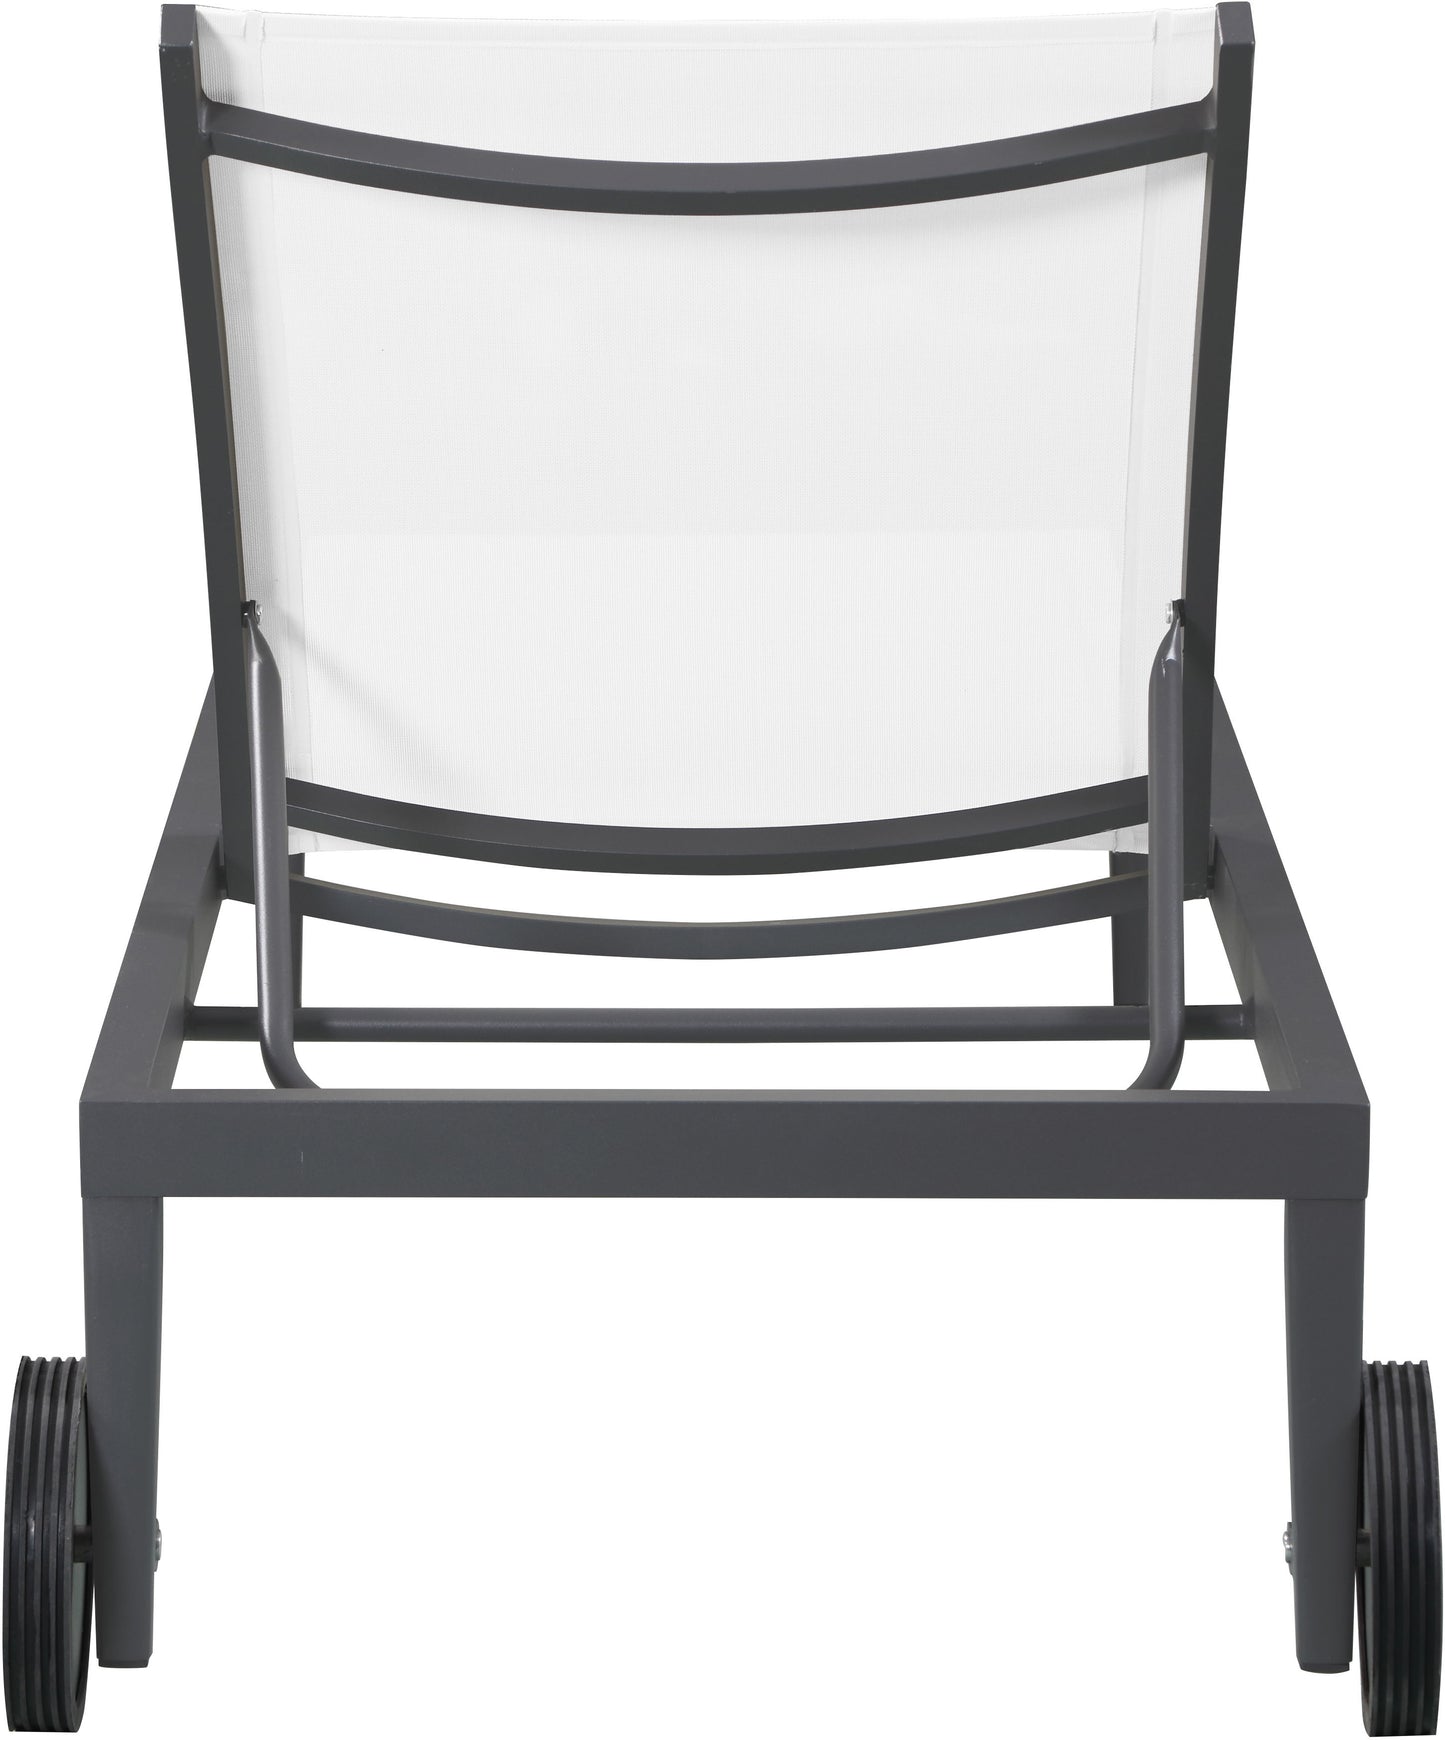 Nizuc - Outdoor Chaise Lounge Chair